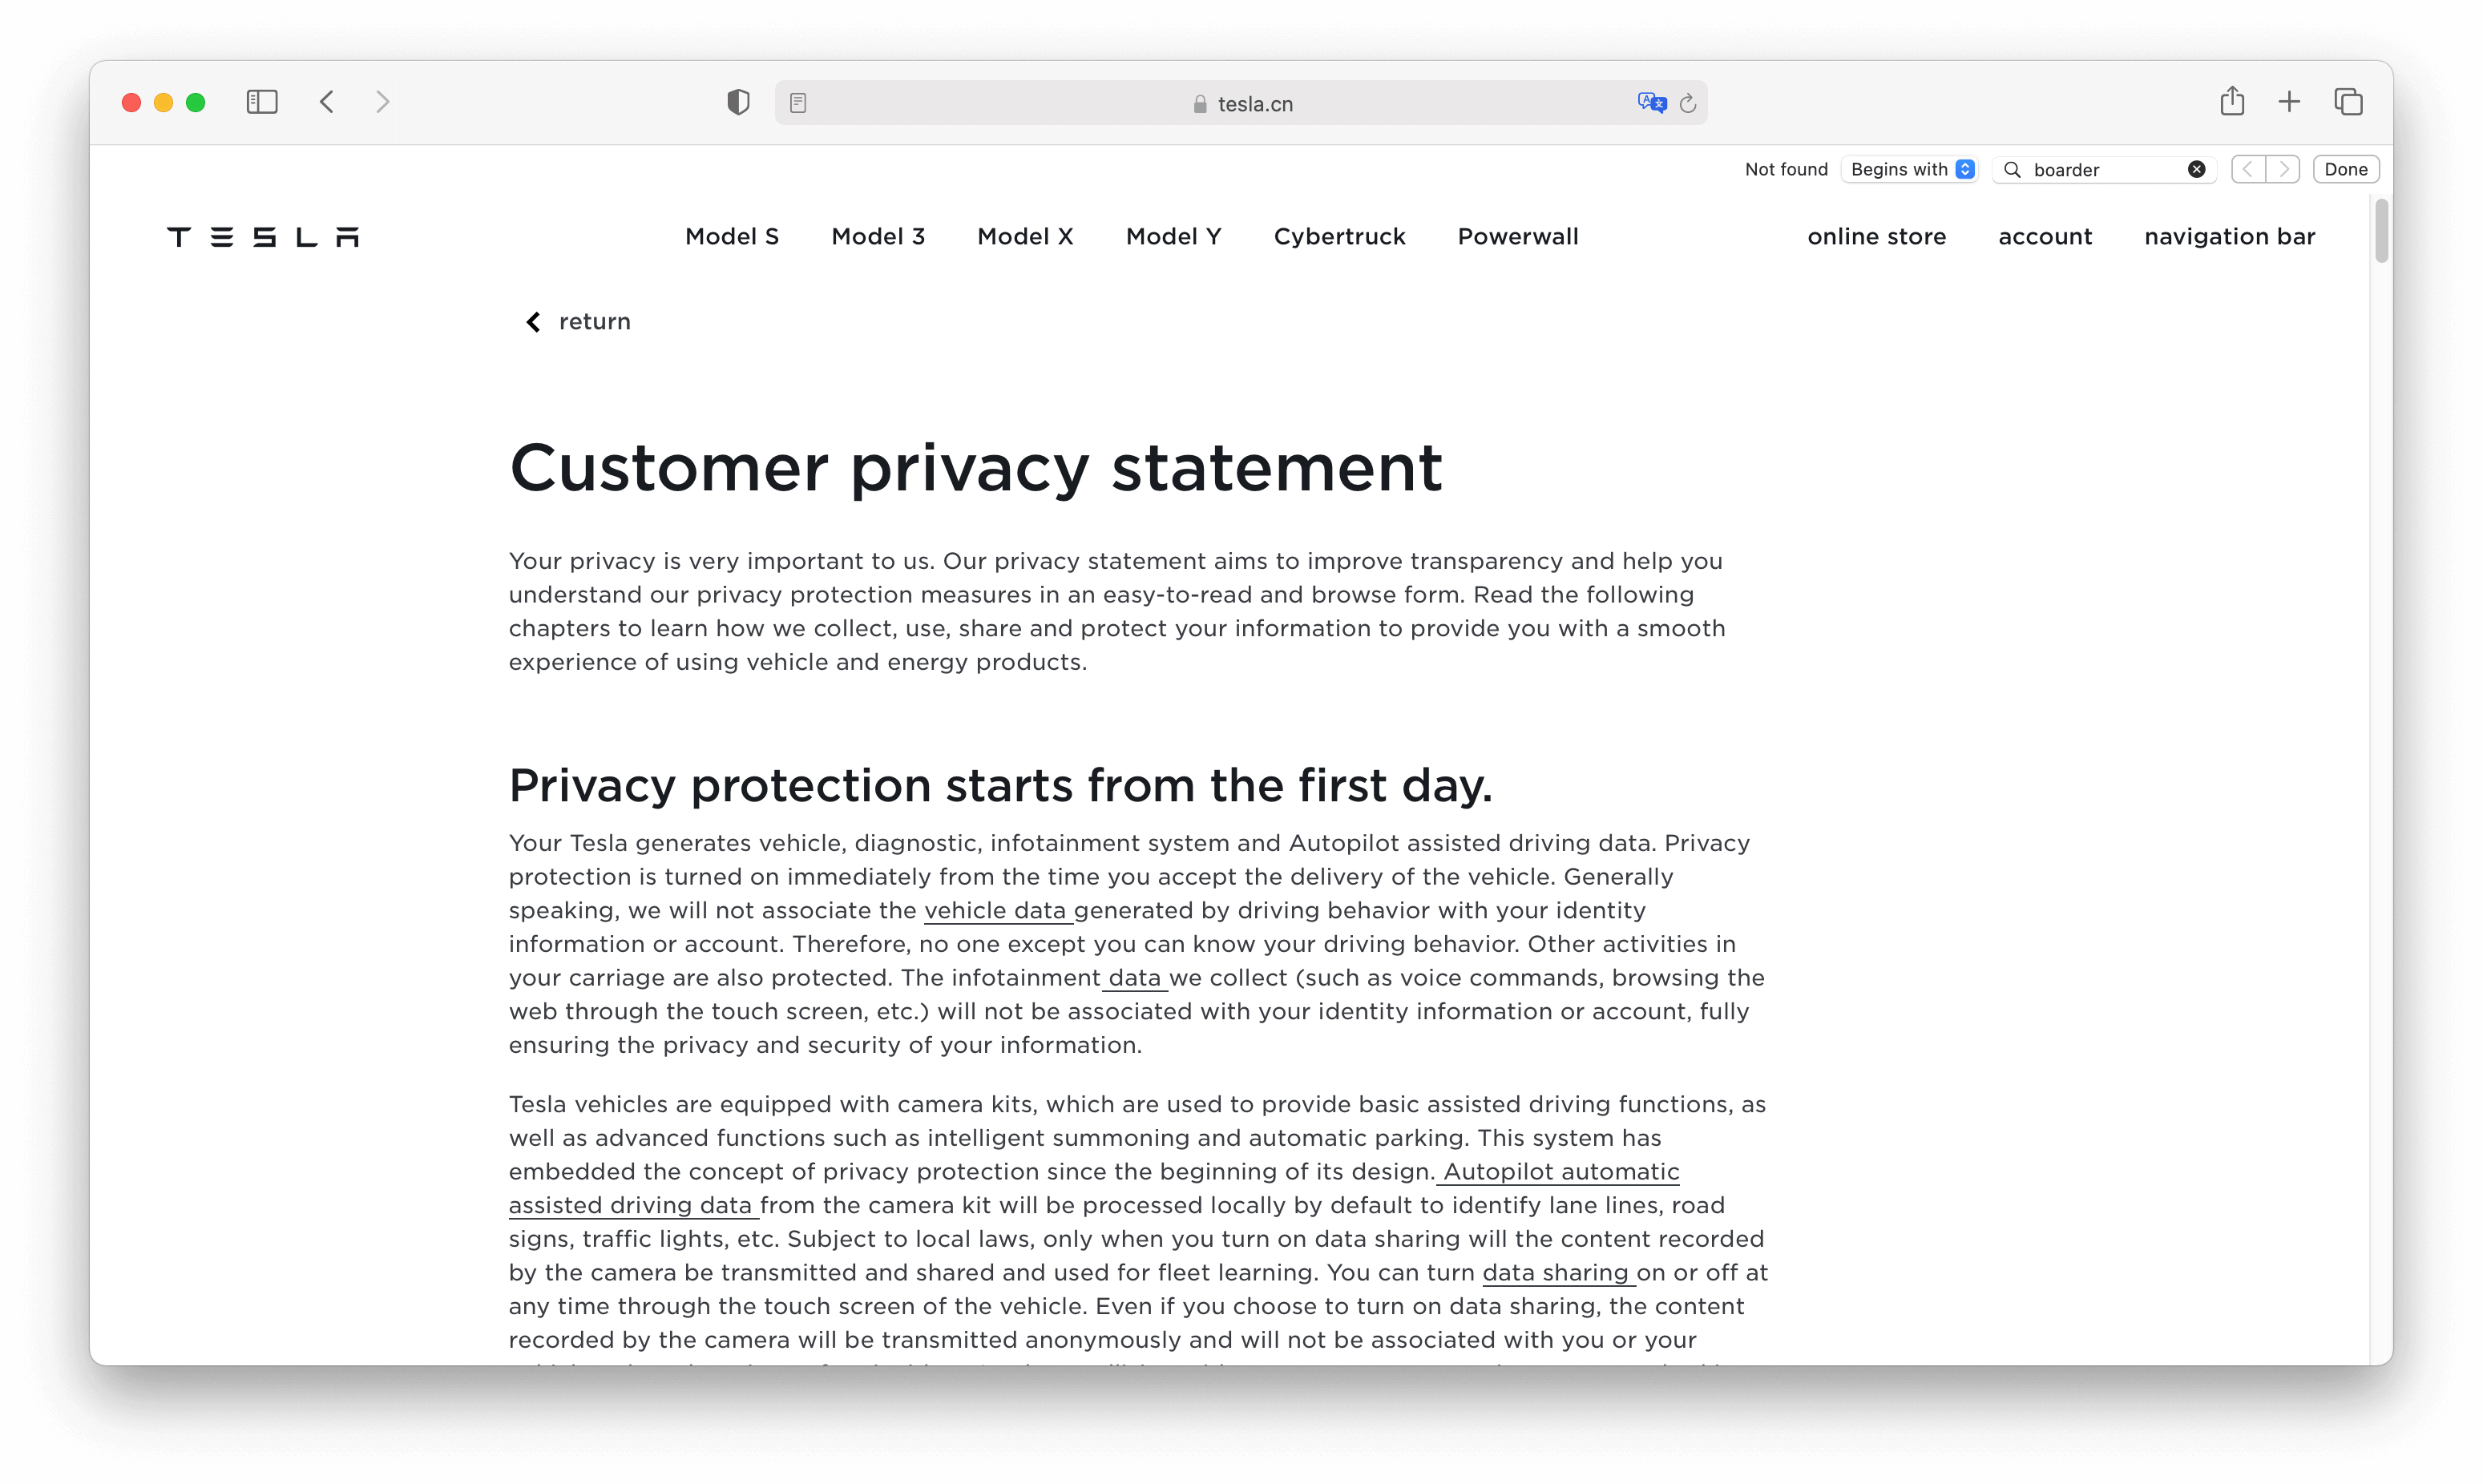 Tesla.cn's Public Privacy Statement